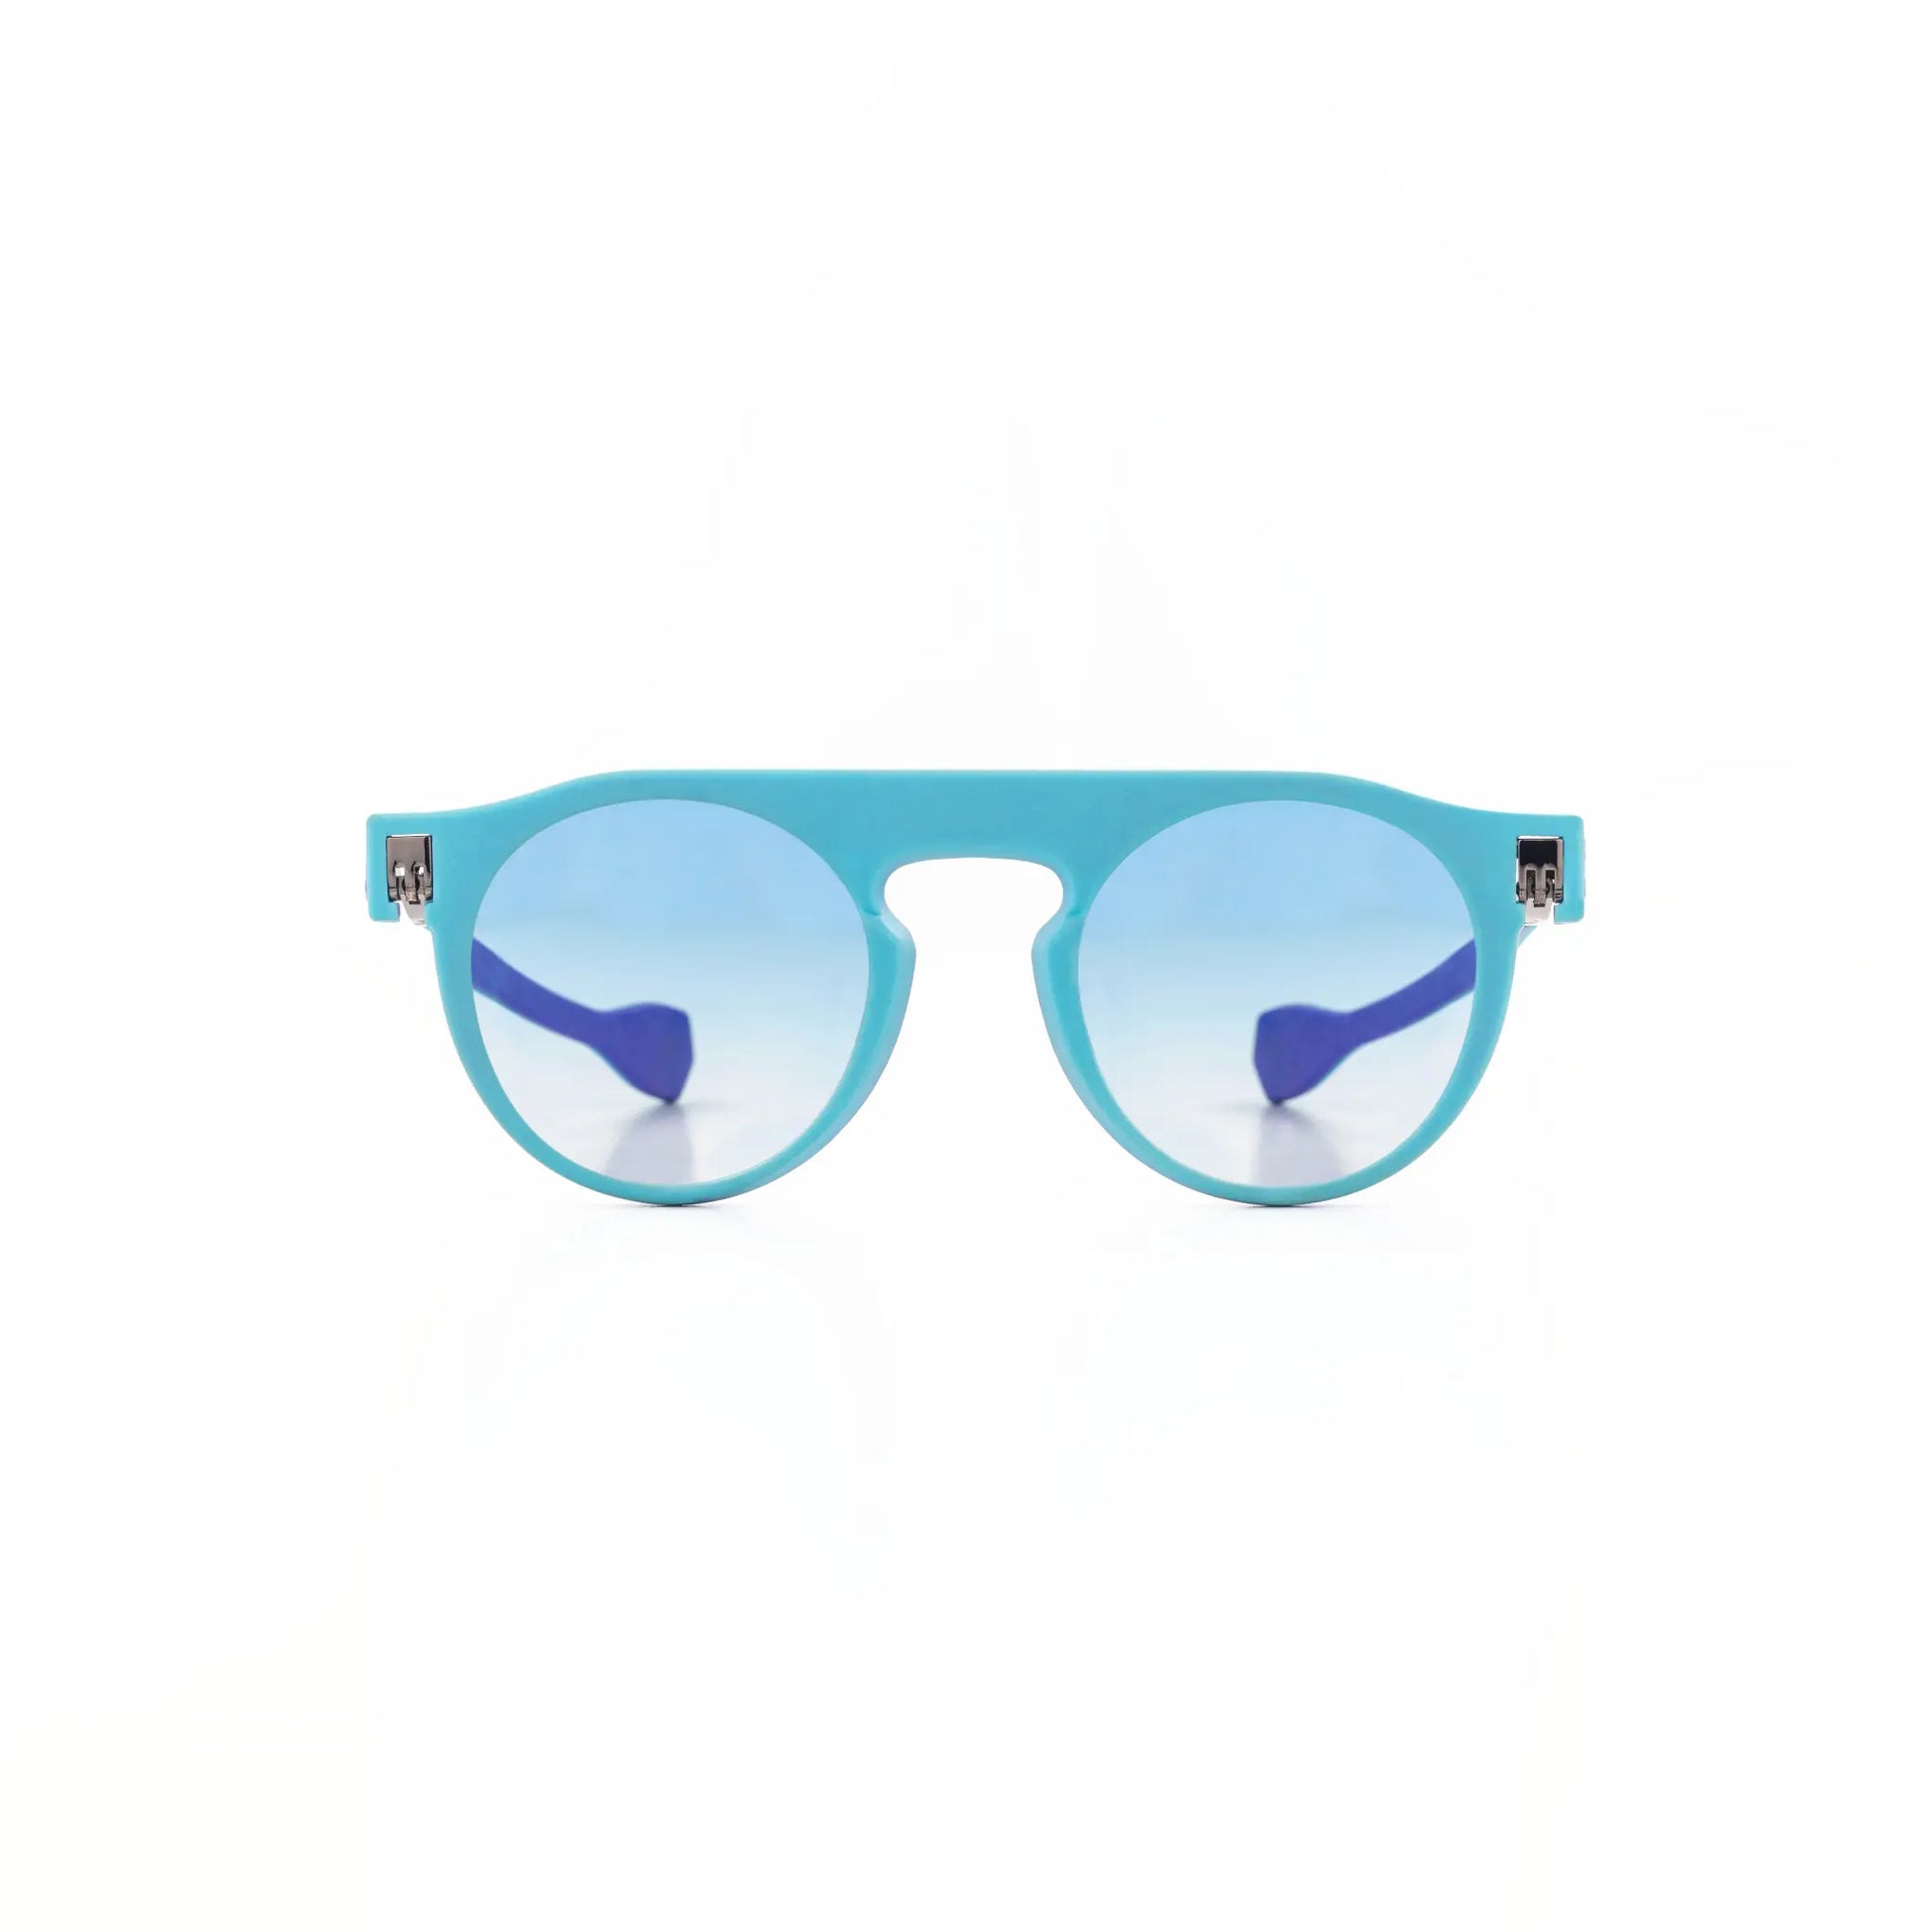 Reverso sunglasses Light Blue & purple reversible & ultra light front view 2